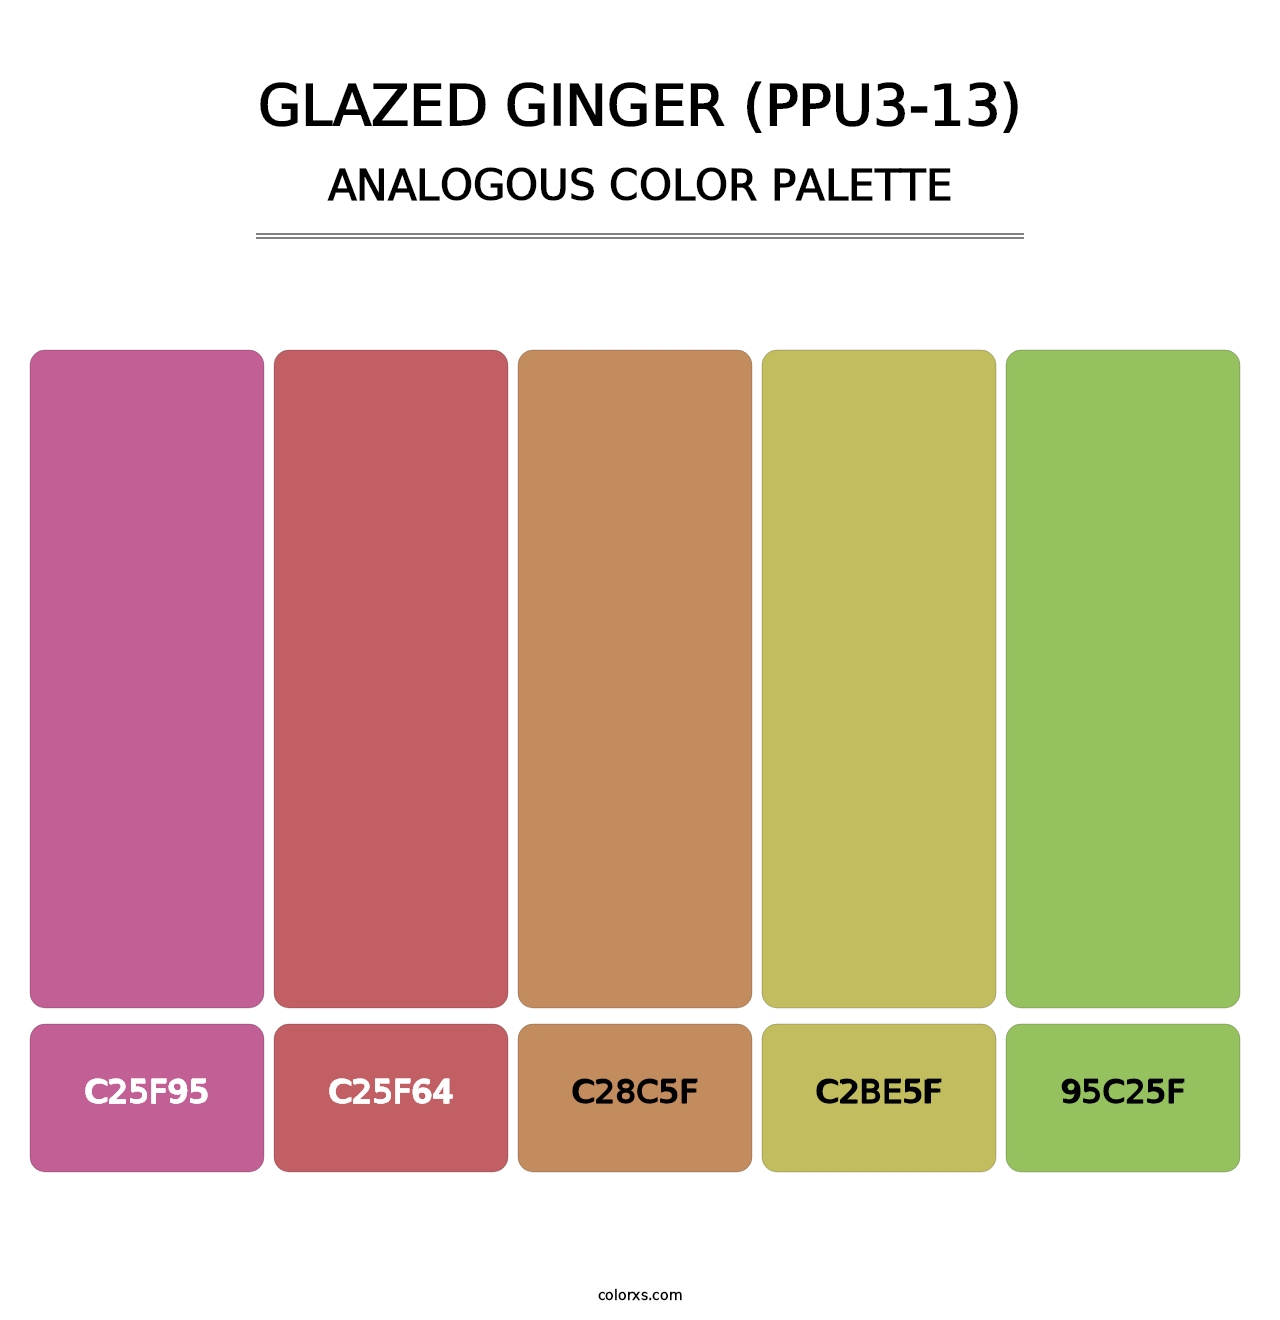 Glazed Ginger (PPU3-13) - Analogous Color Palette